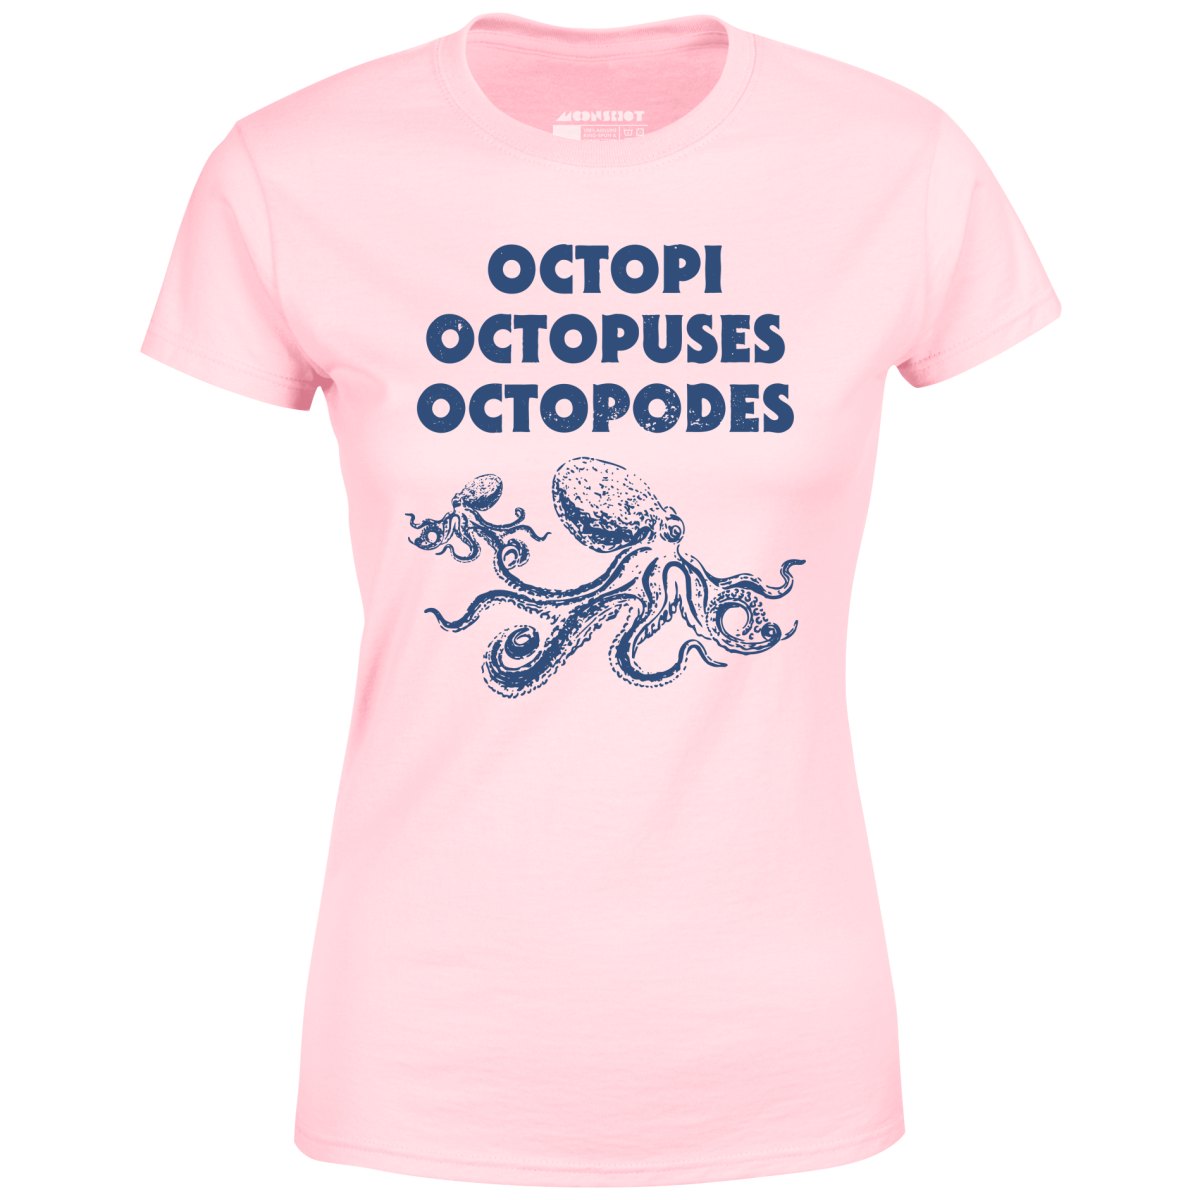 Octopi Octopuses Octopodes - Women's T-Shirt